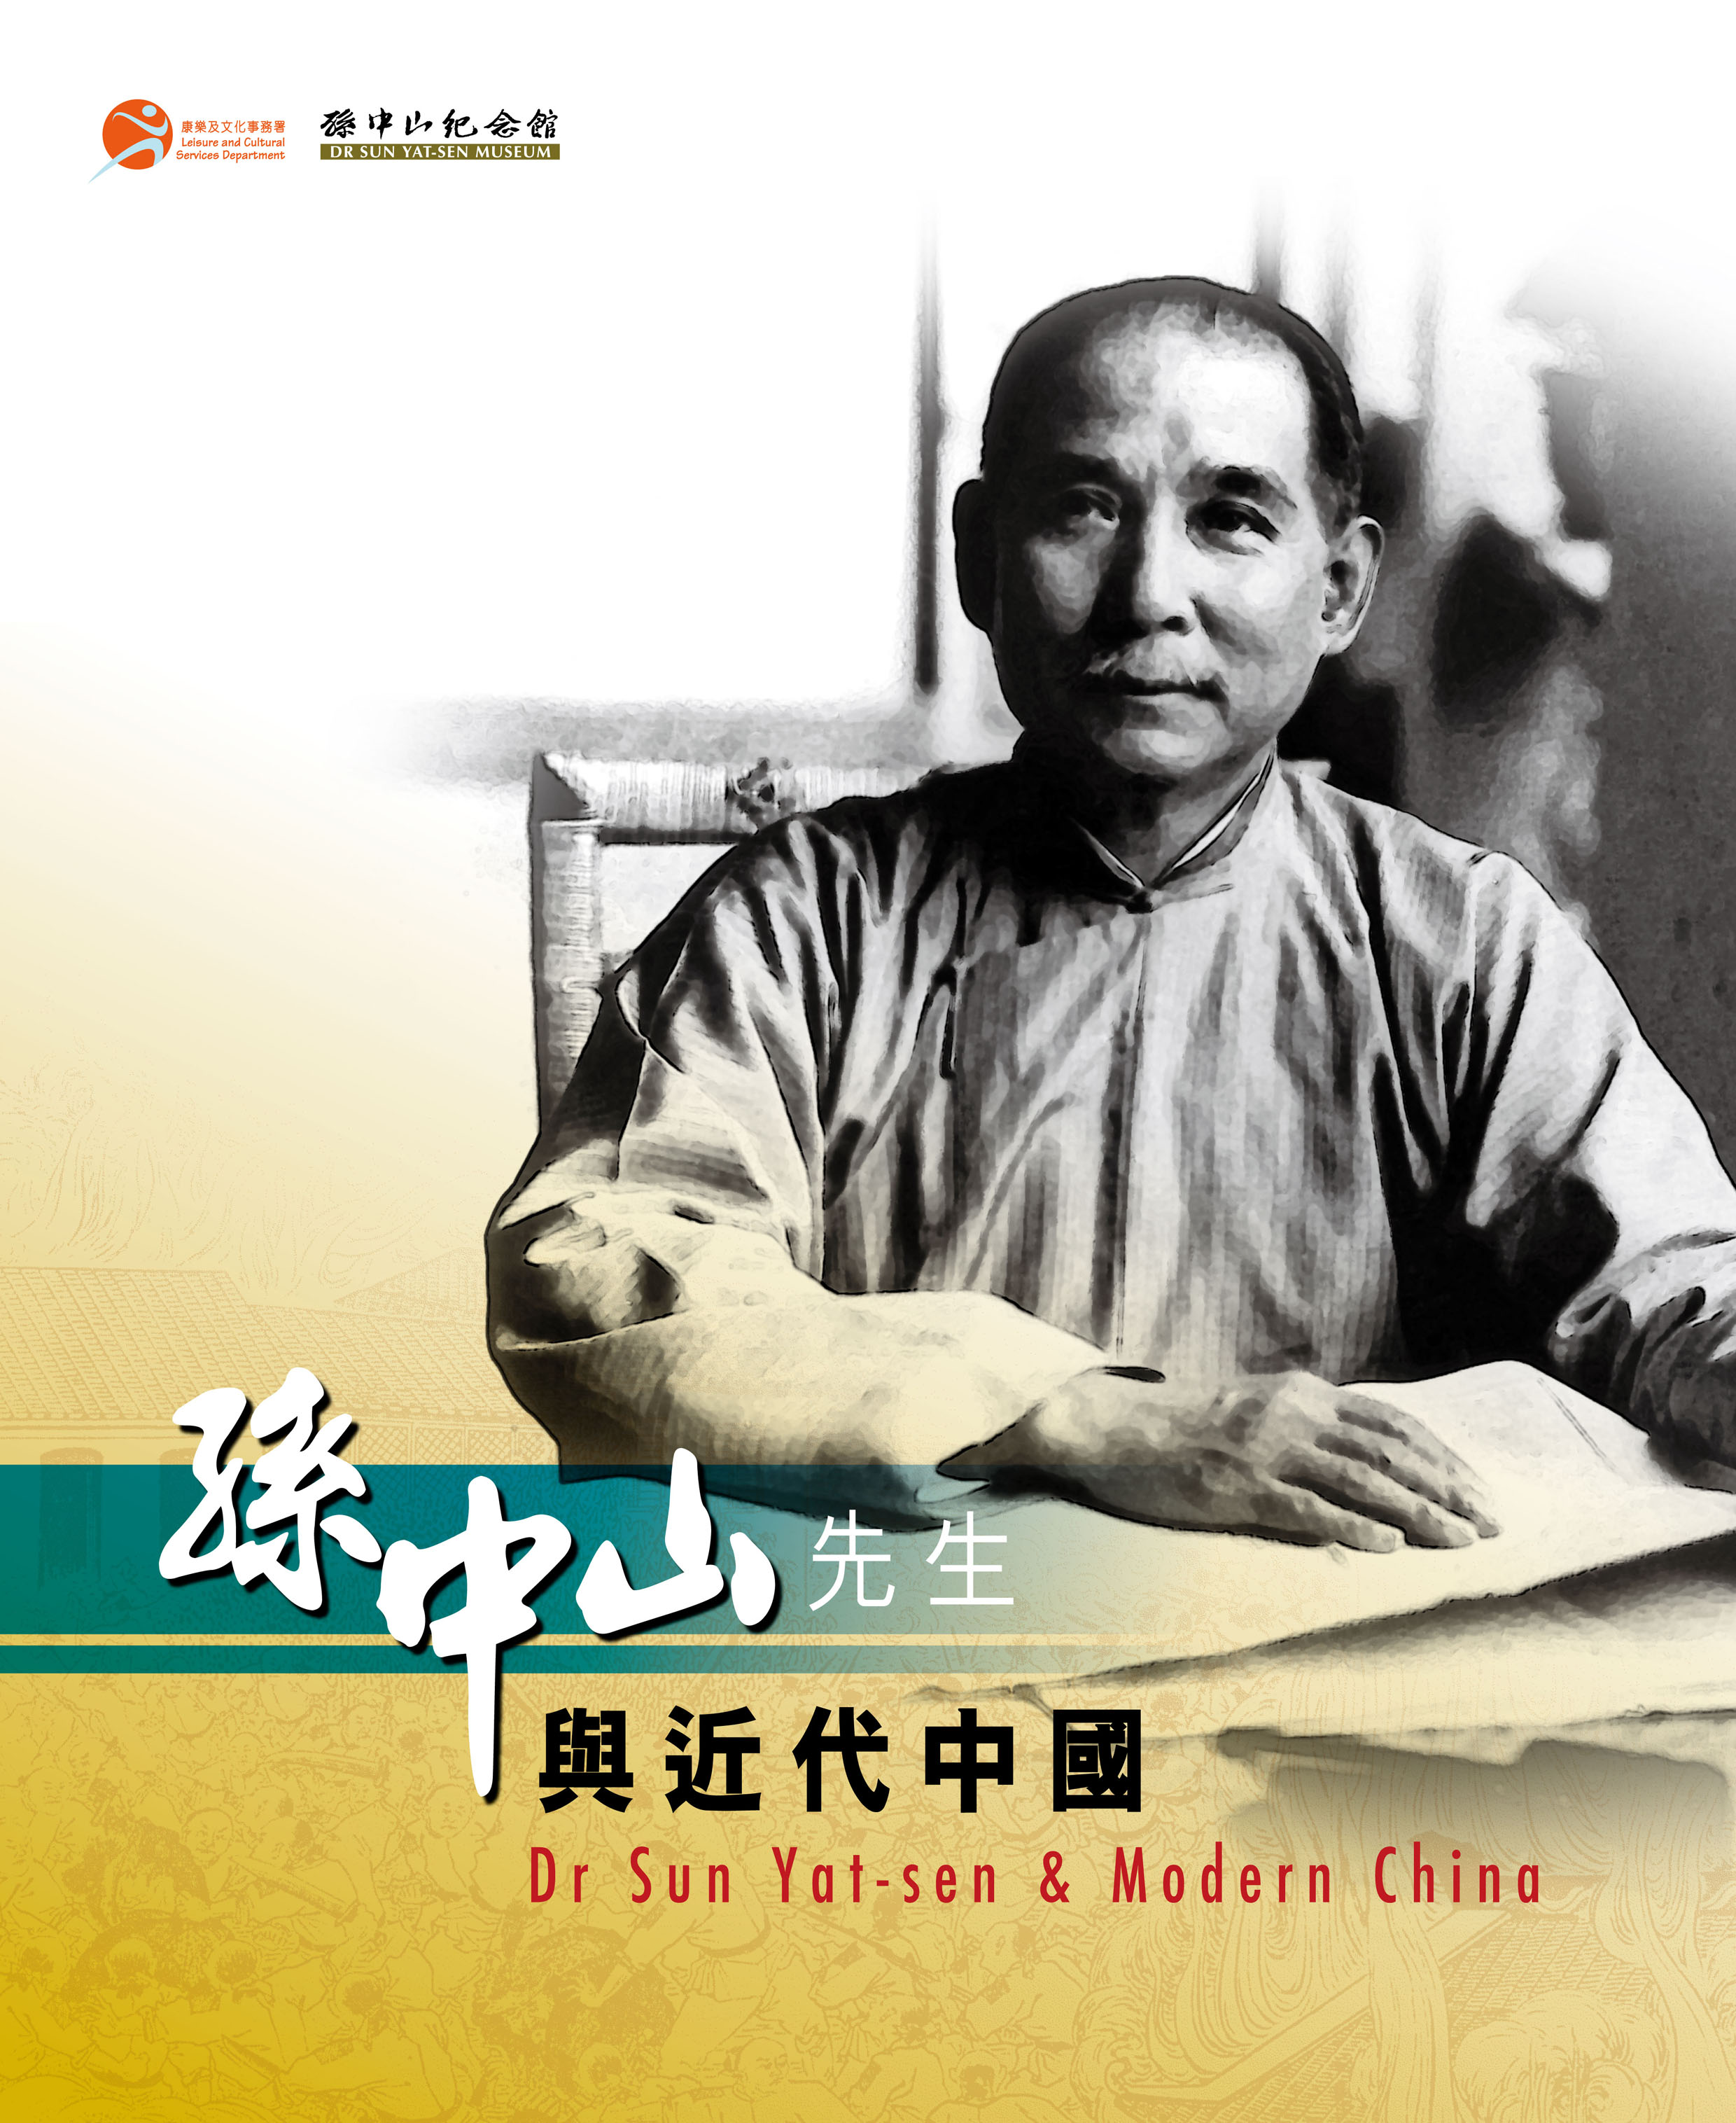 Dr Sun Yat-sen and Modern China